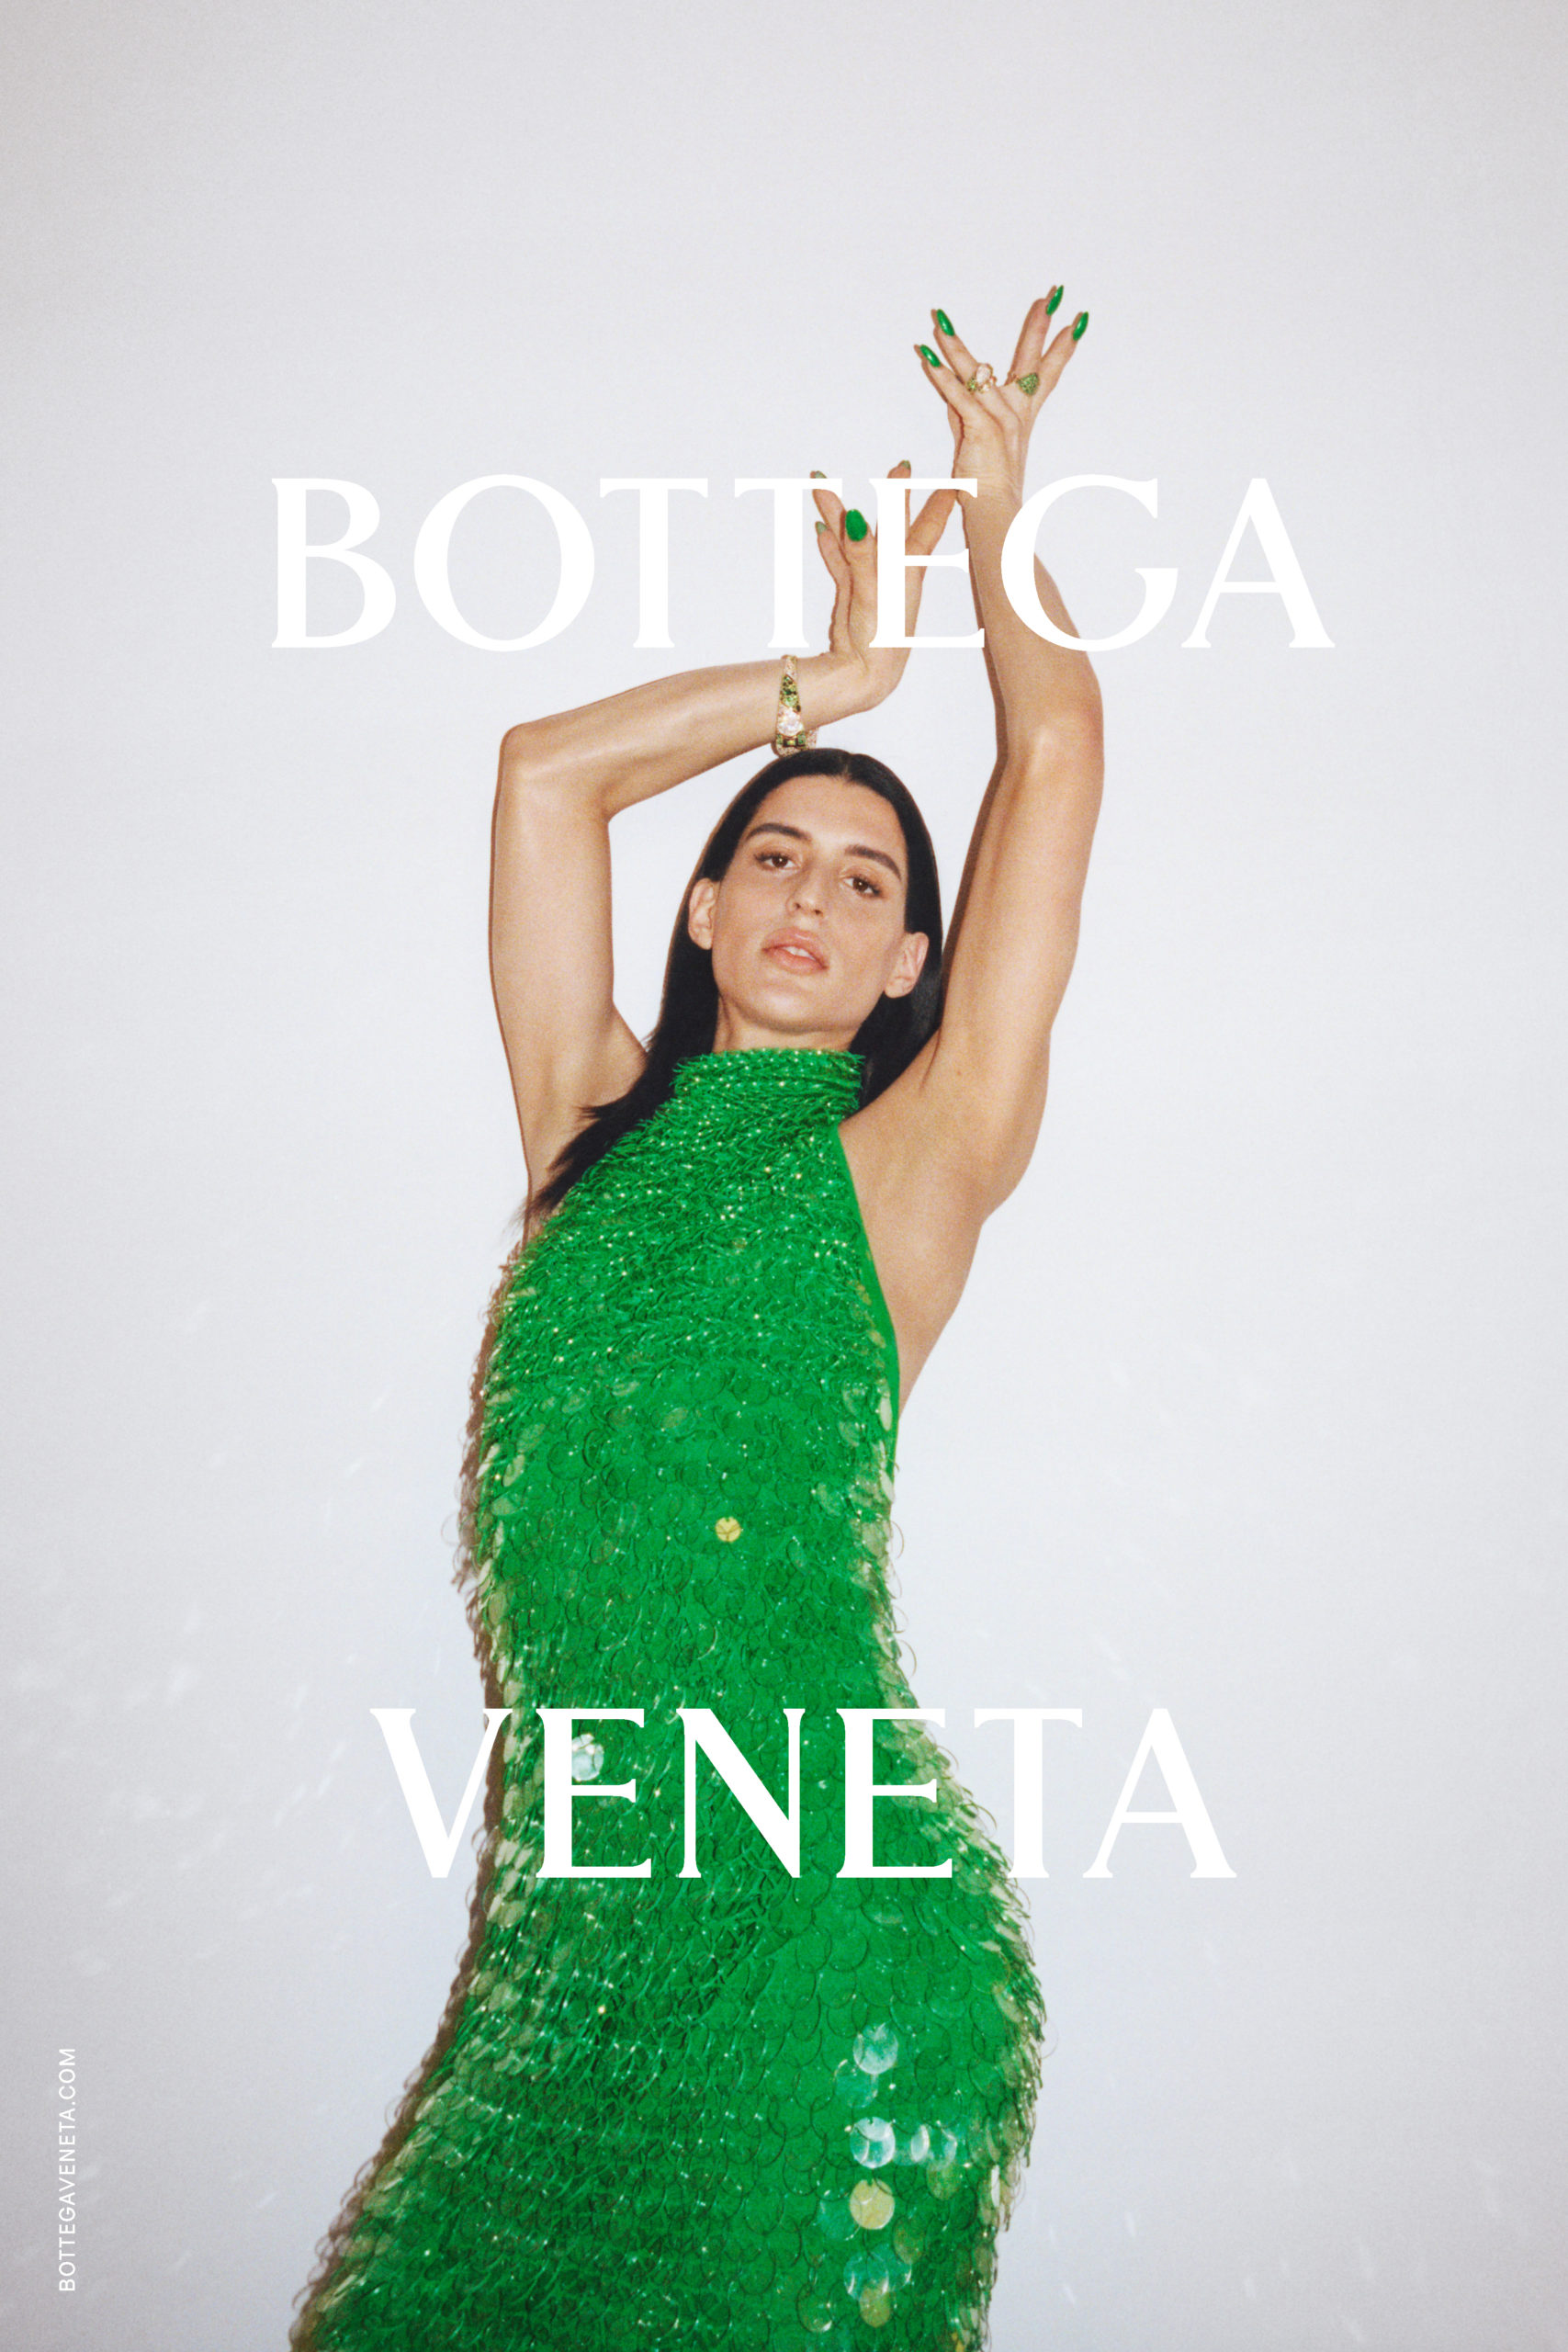 Why Celebs Love Bottega Veneta – The Ultimate Comeback Brand